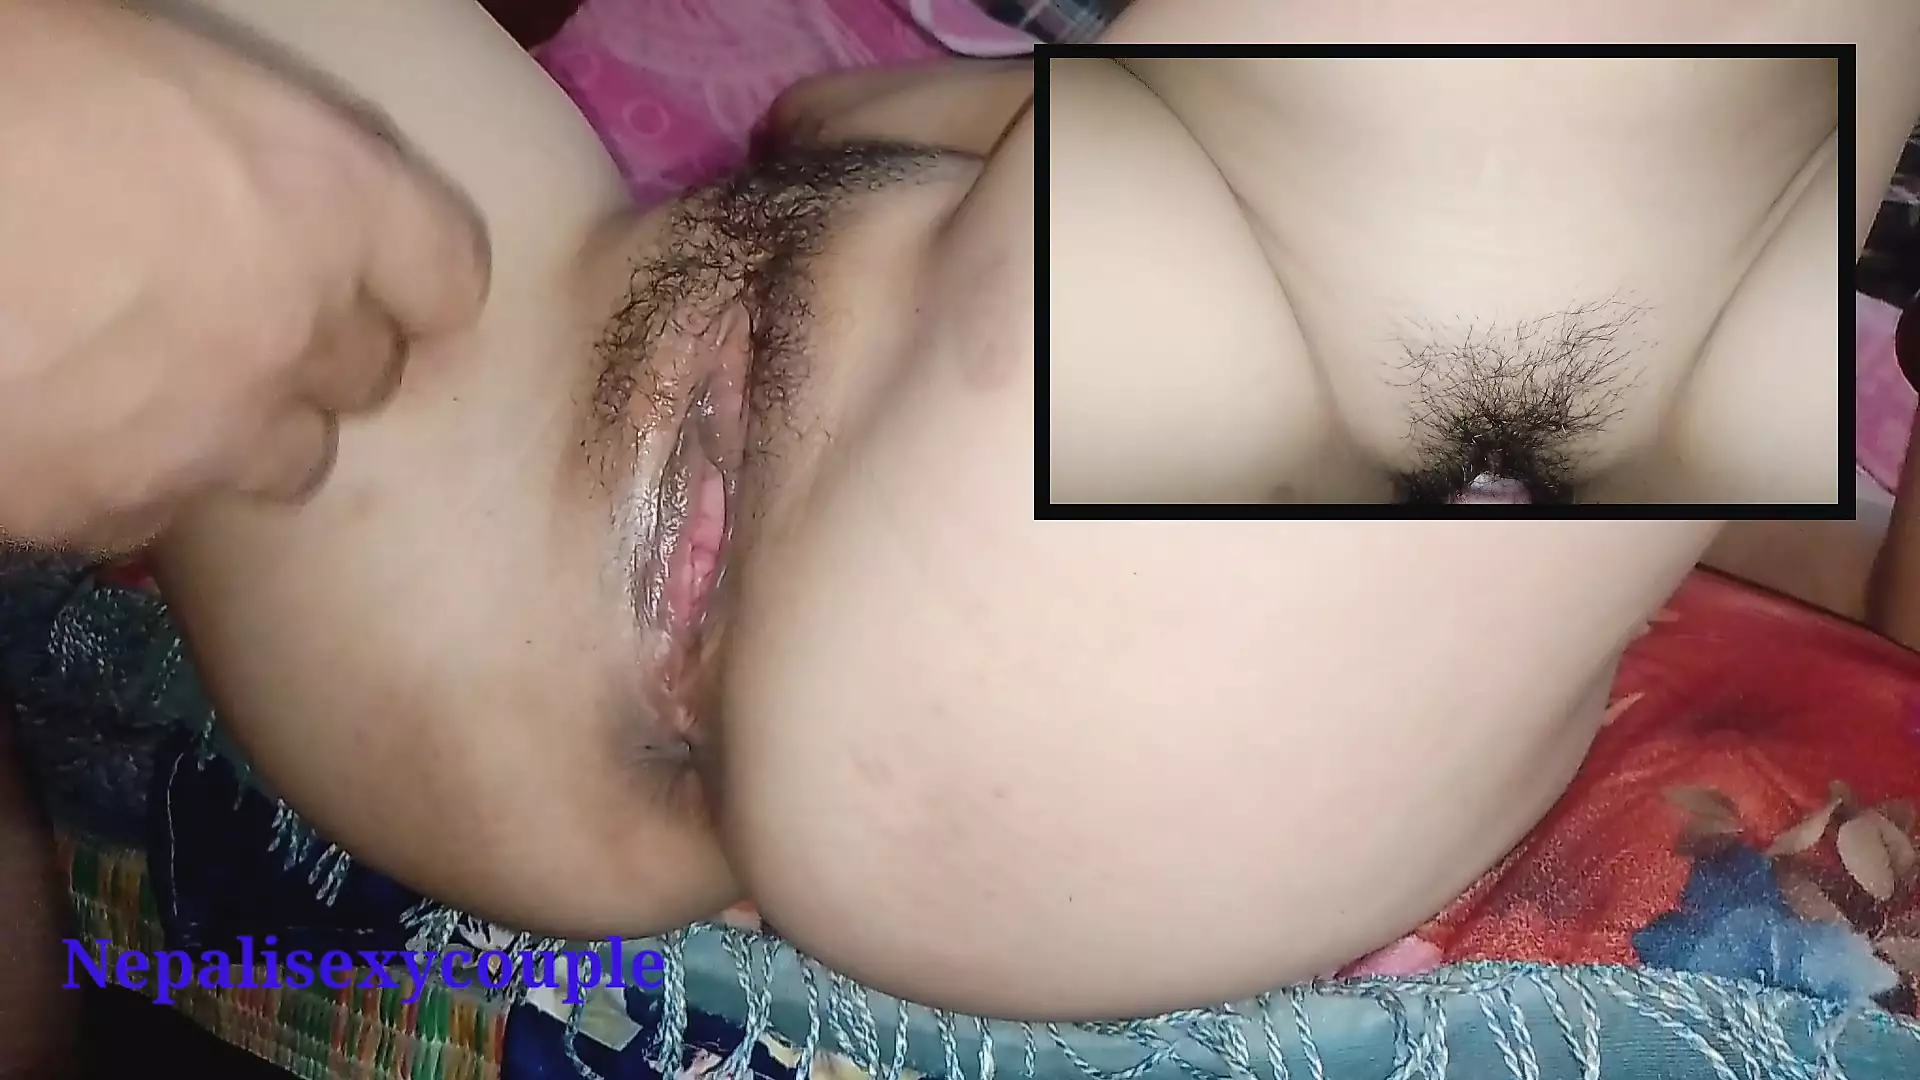 Nepali Sexy Couple In Hard Homemade Sex Video